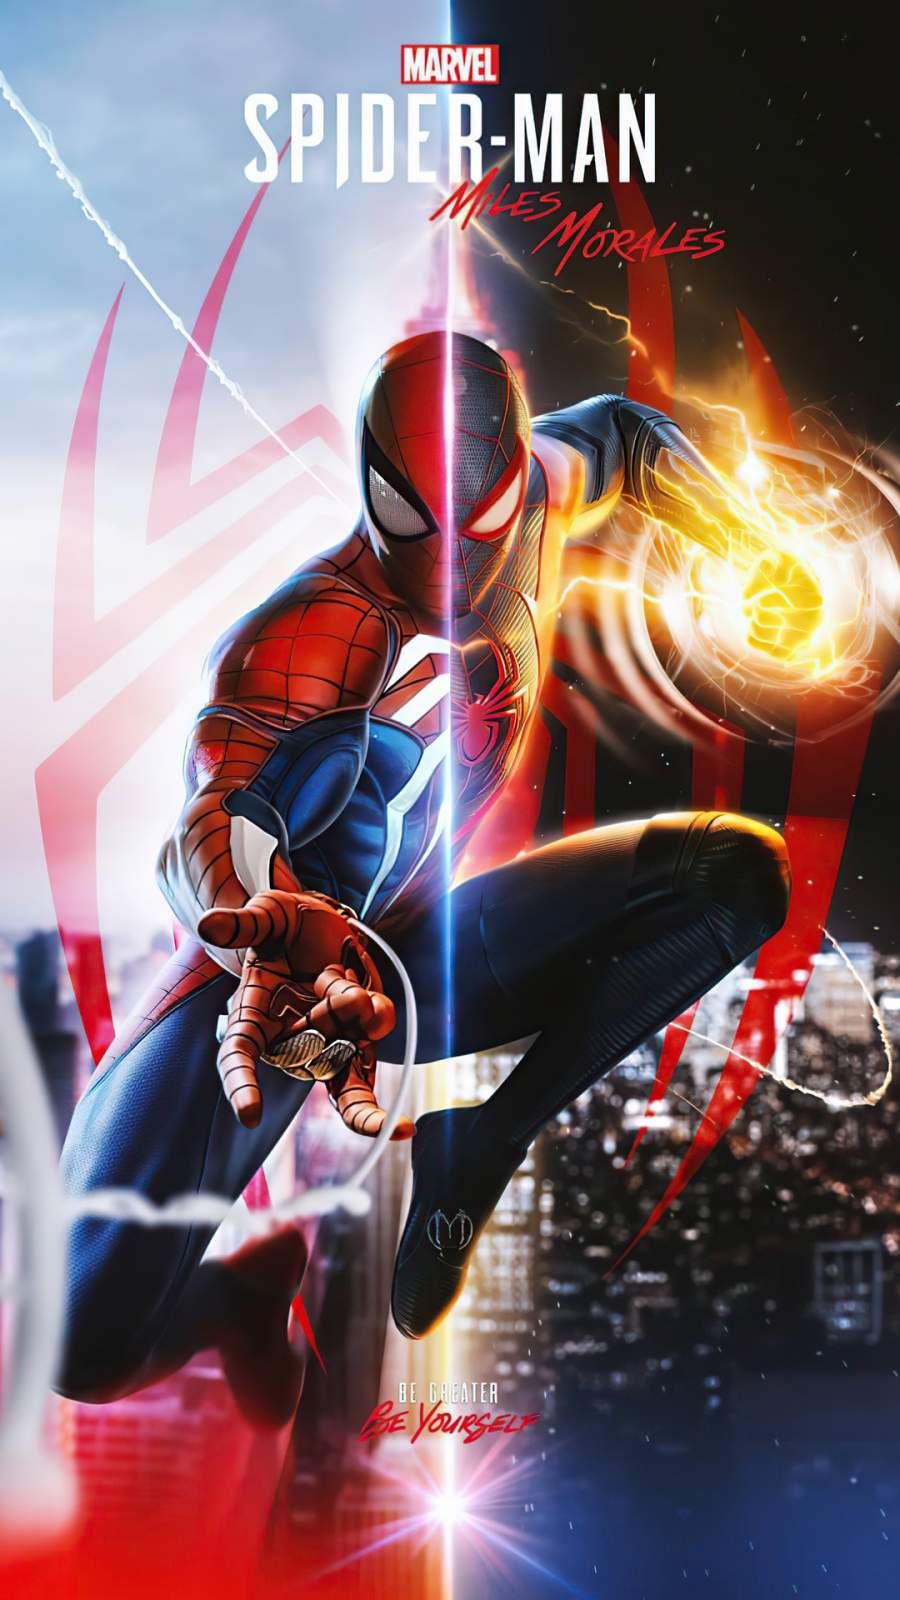 John Wick Mode Wallpaper, iPhone Wallpaper. Spiderman picture, Marvel spiderman art, Spiderman